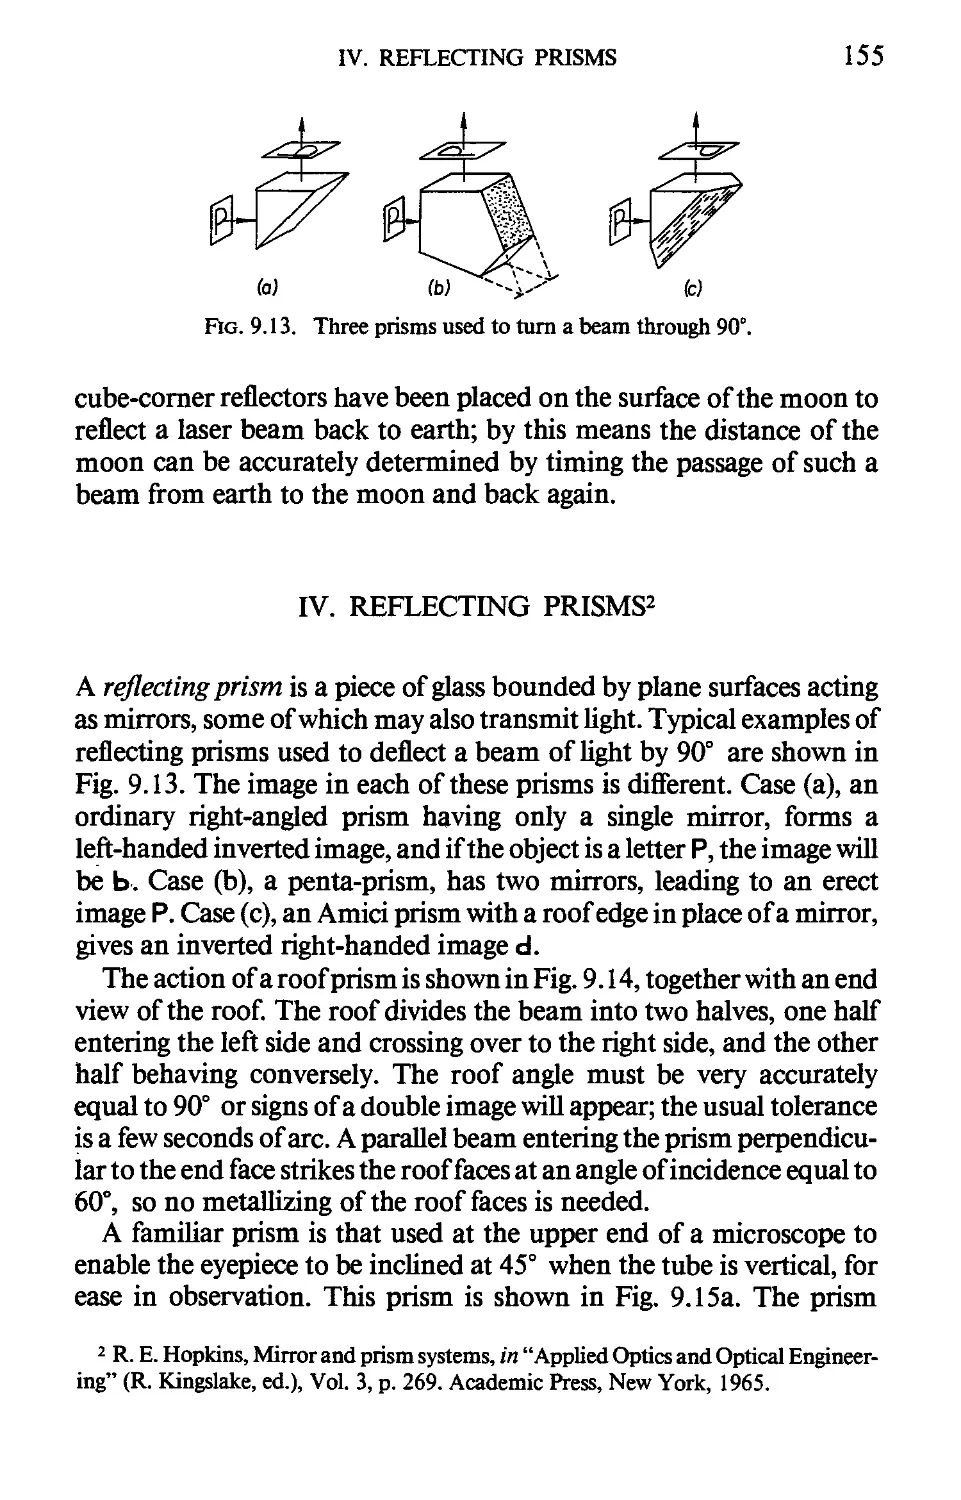 IV. Reflecting Prisms